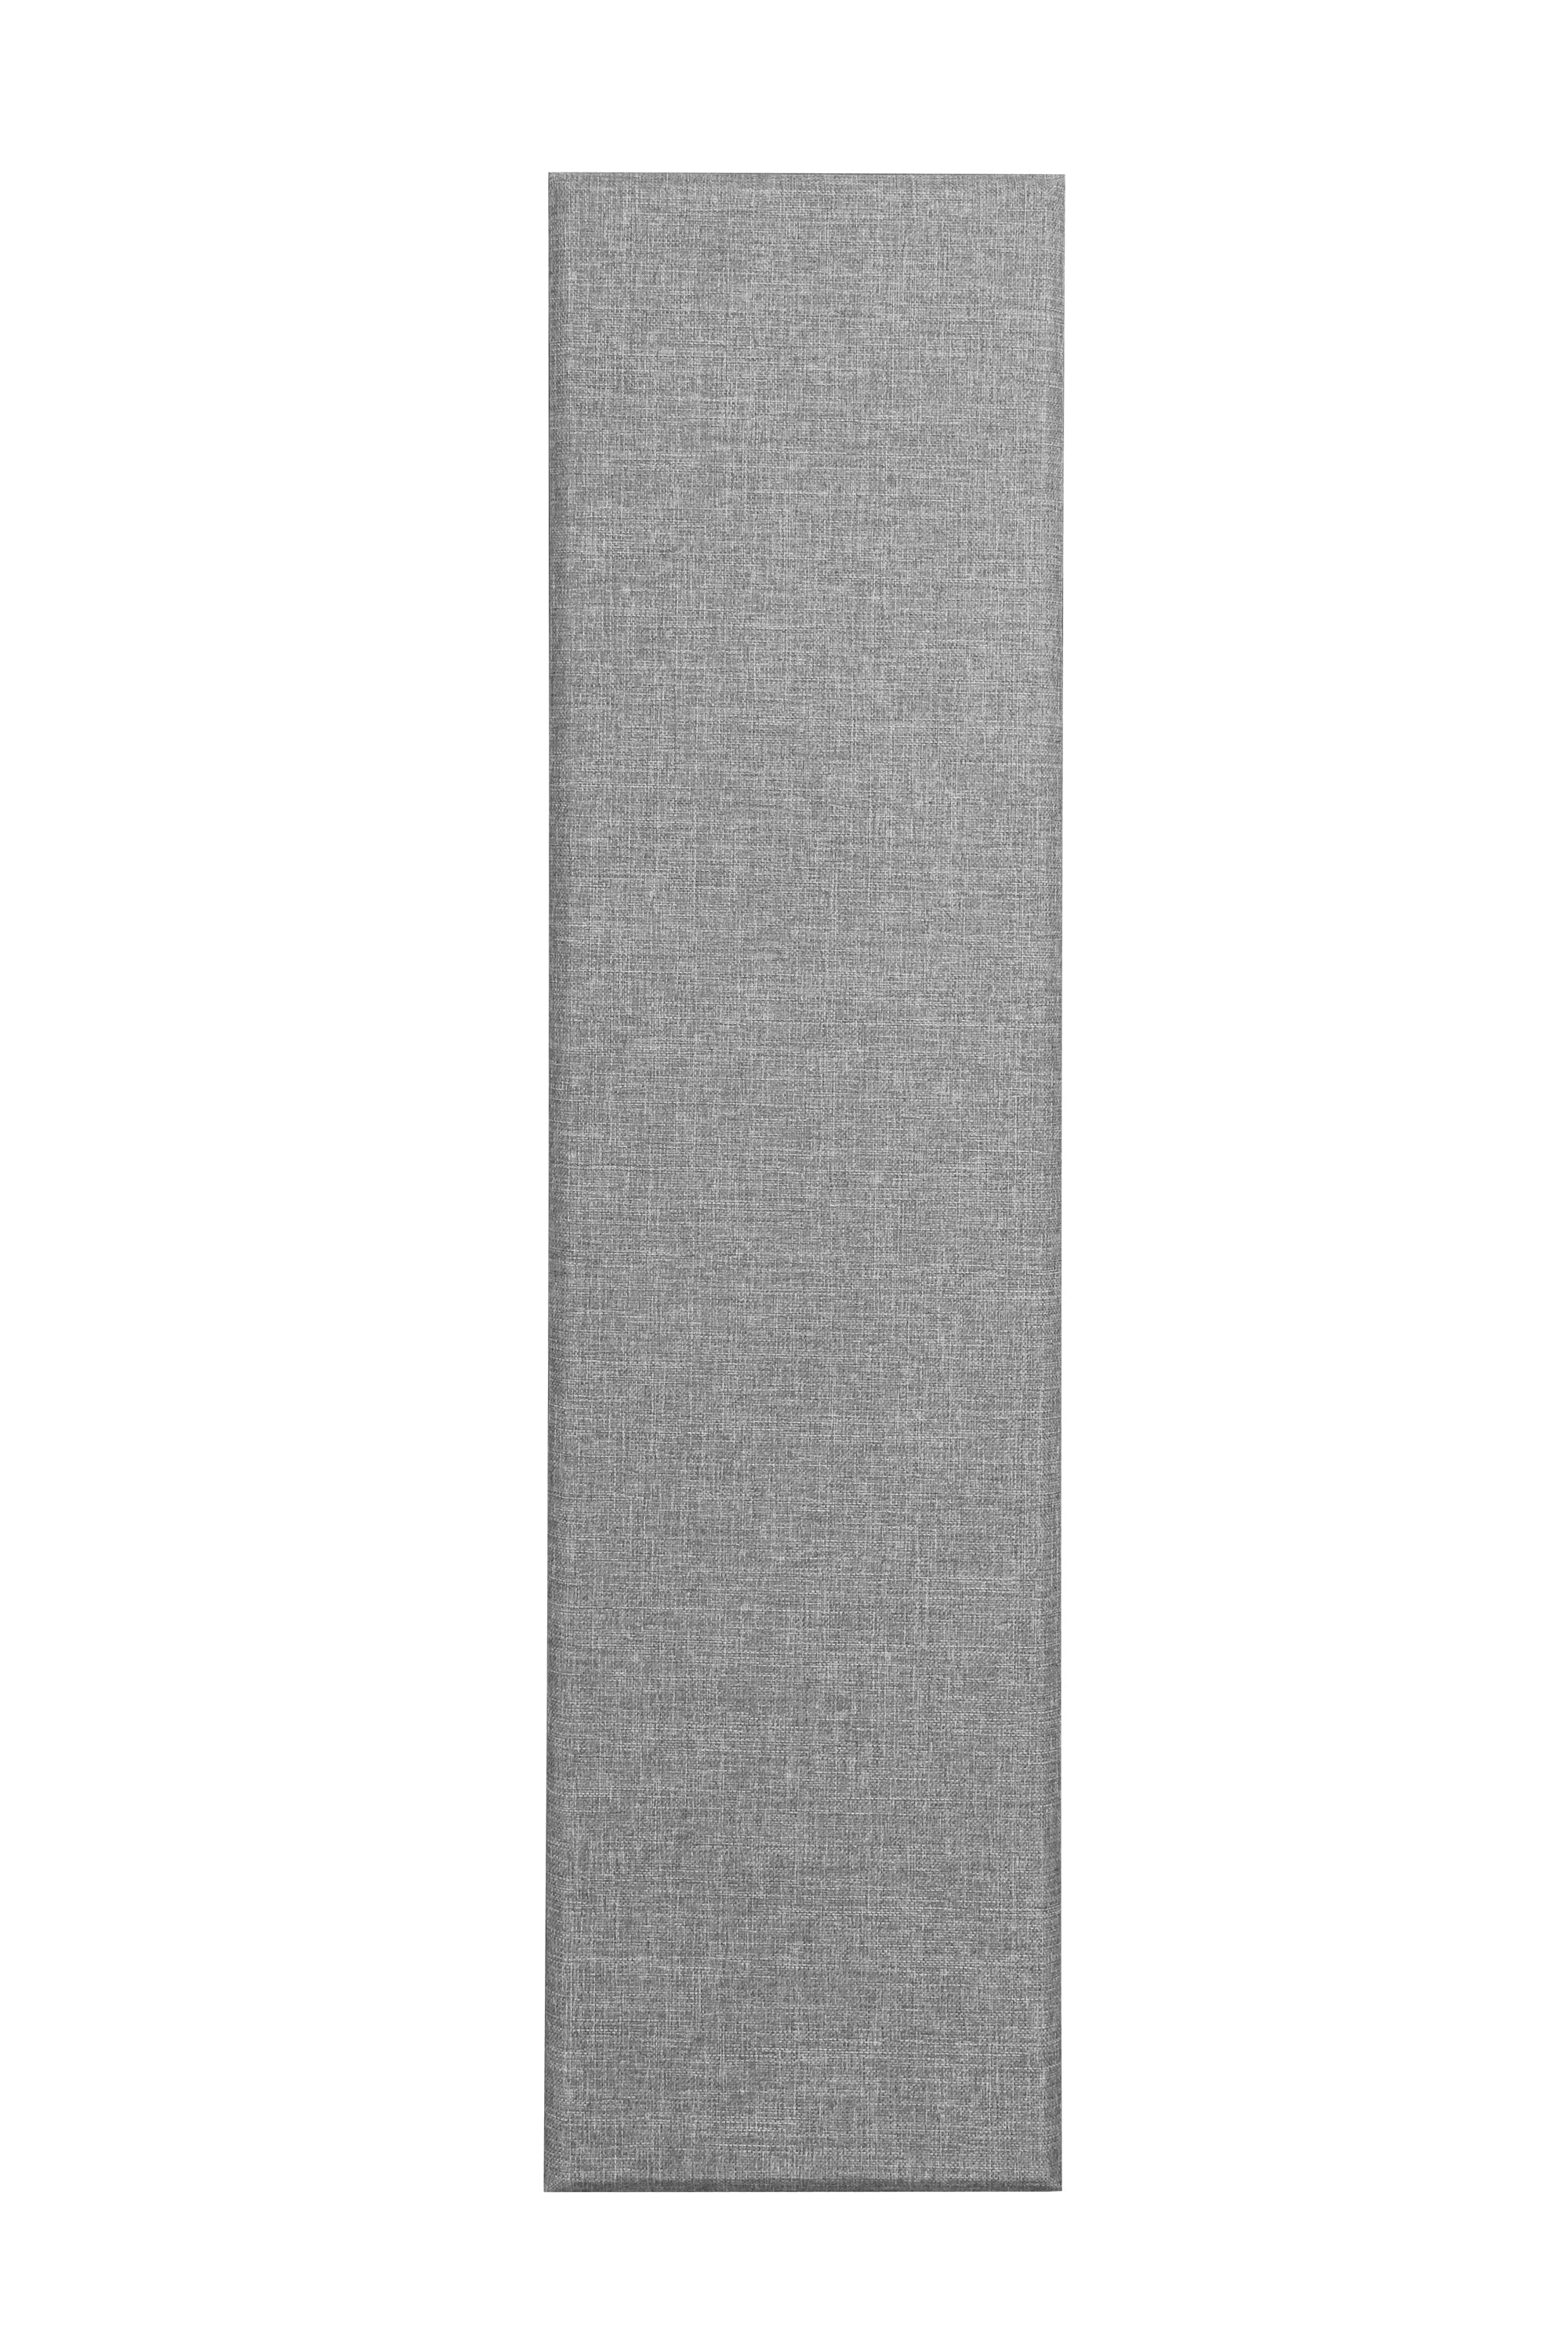 Primacoustic Broadway Acoustic Control Column Panel, 8-Pack (12 x 48 x 3")